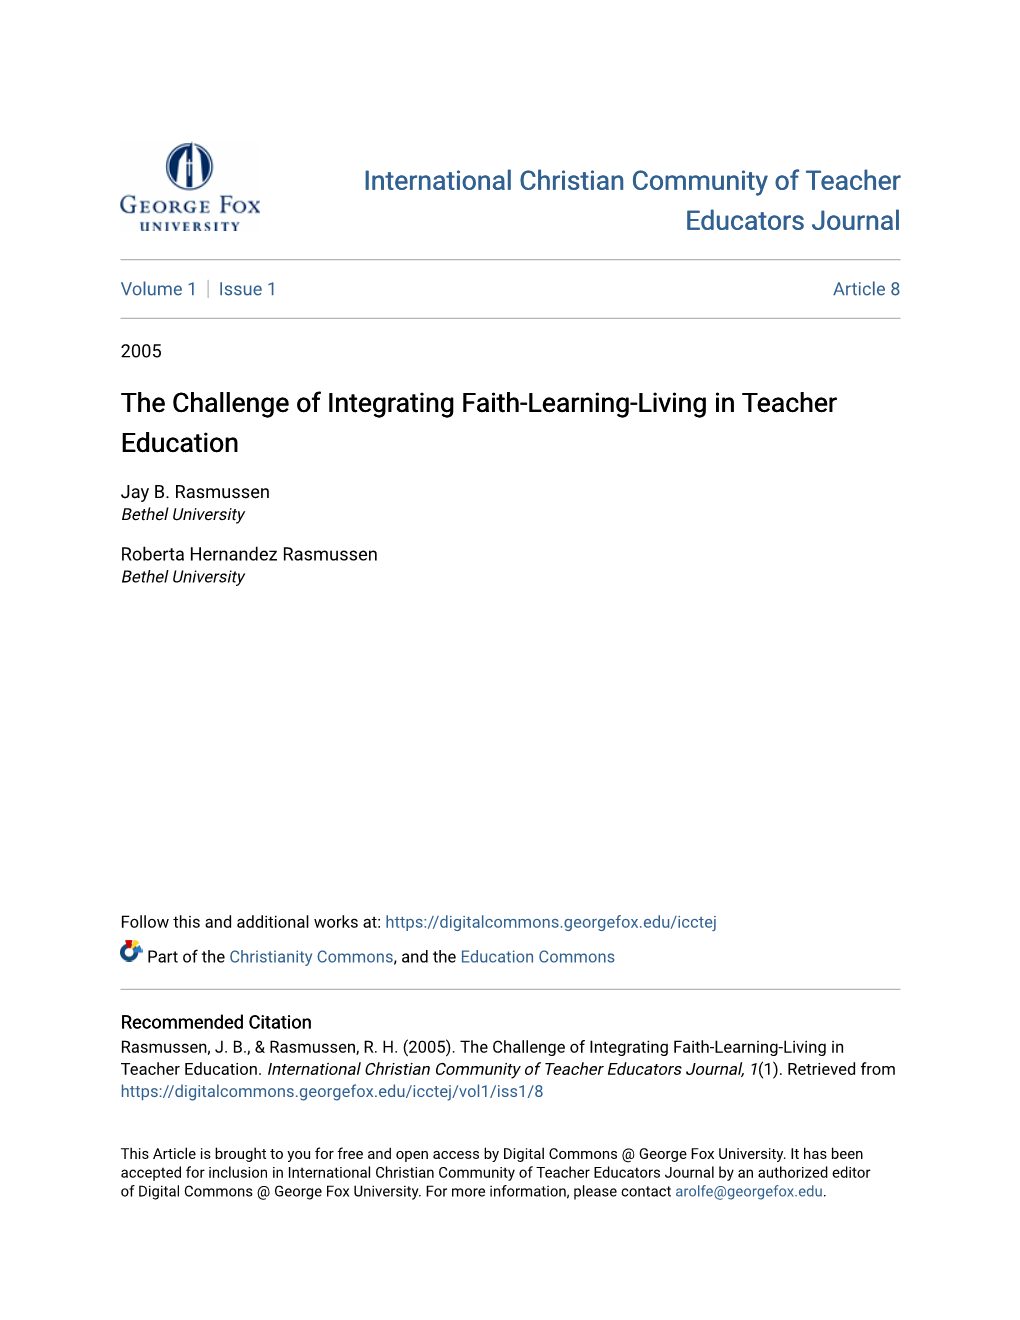 The Challenge of Integrating Faith-Learning-Living in Teacher Education